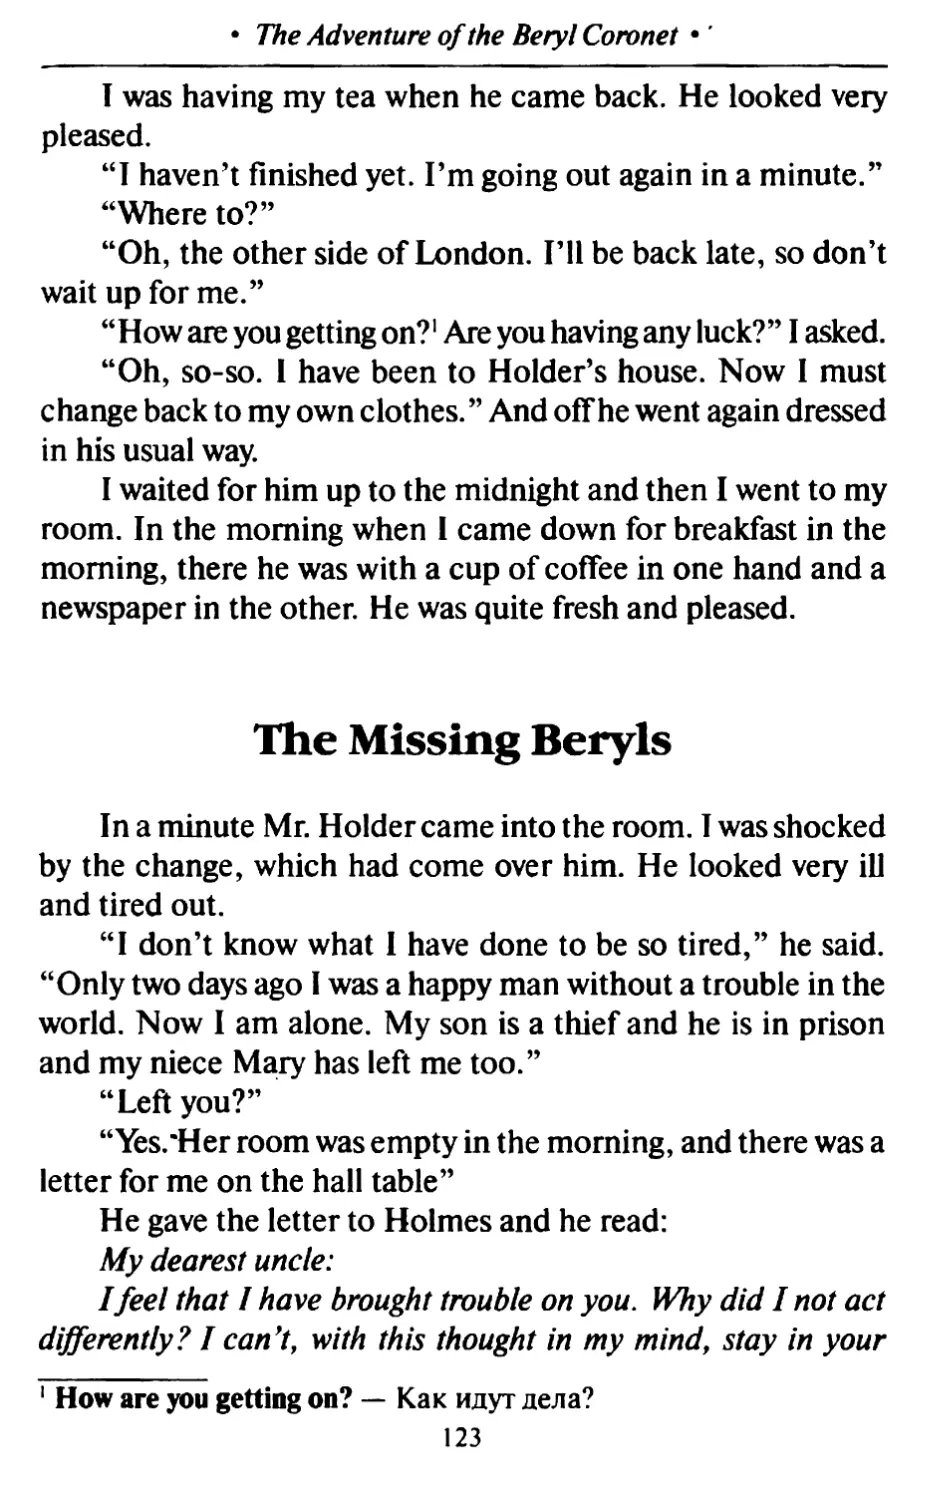 The Missing Beryls